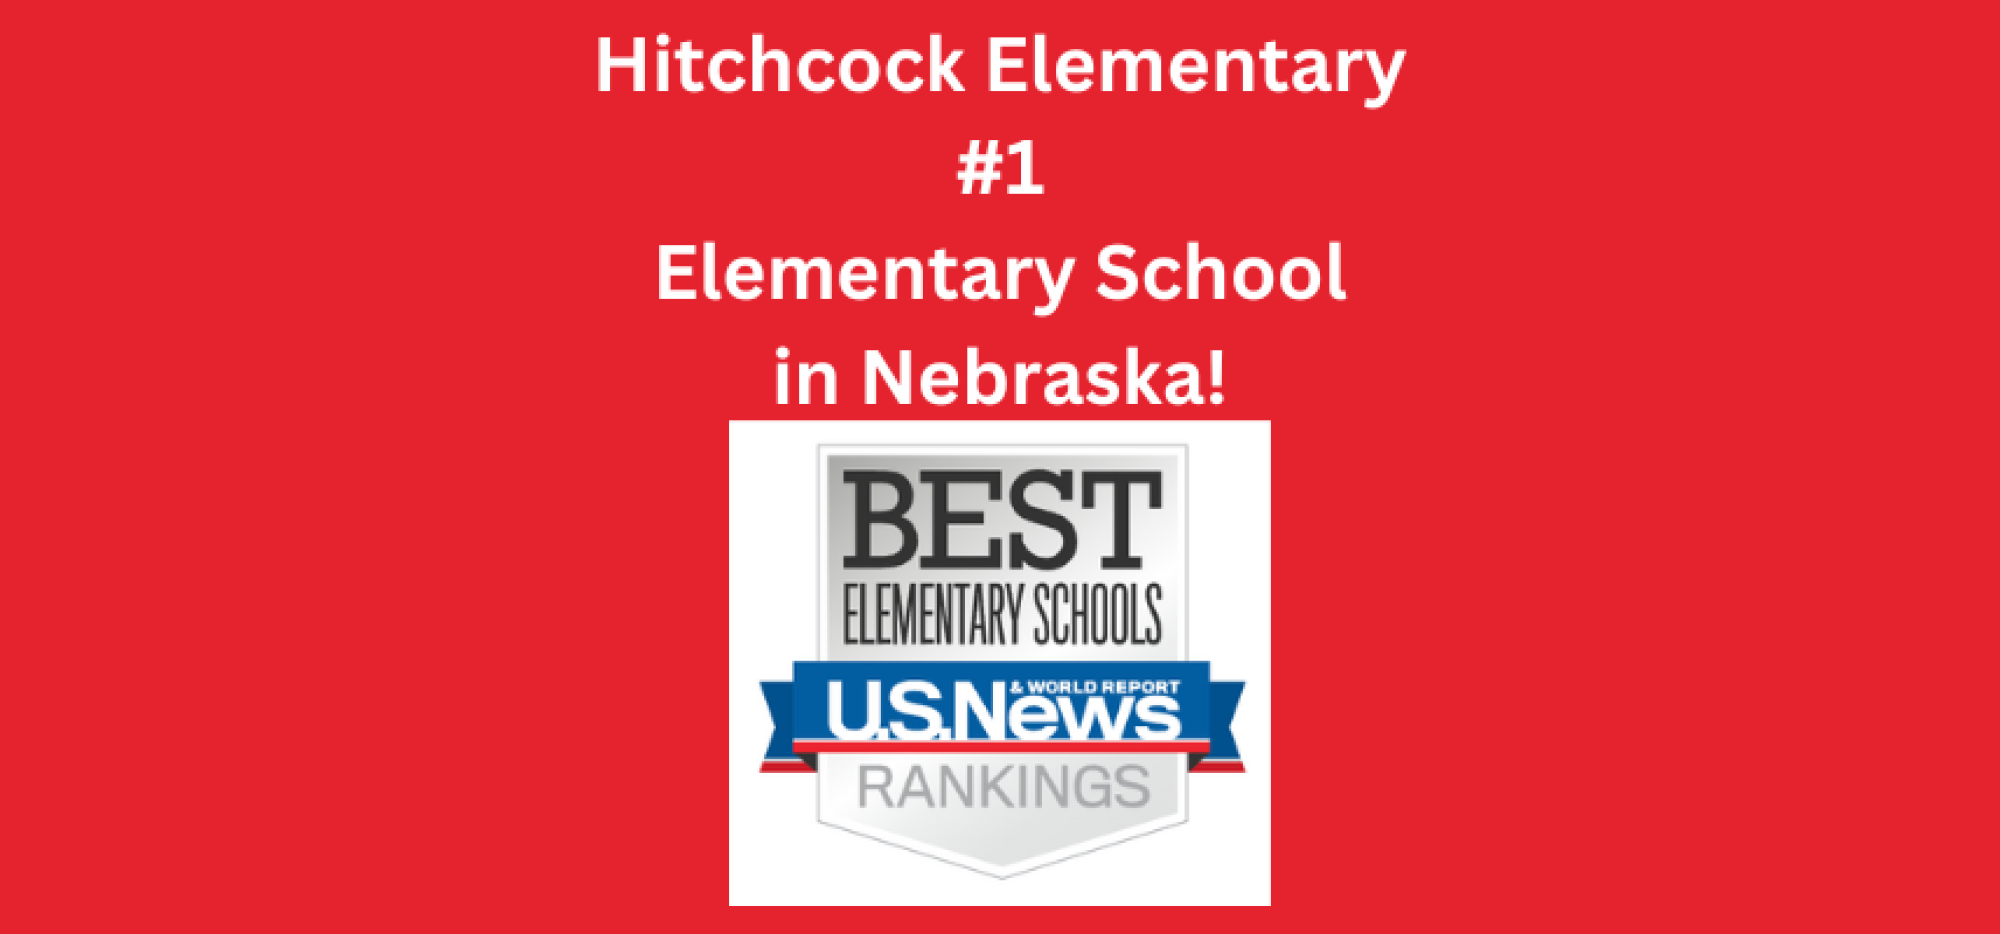 Best Elementary School by US News